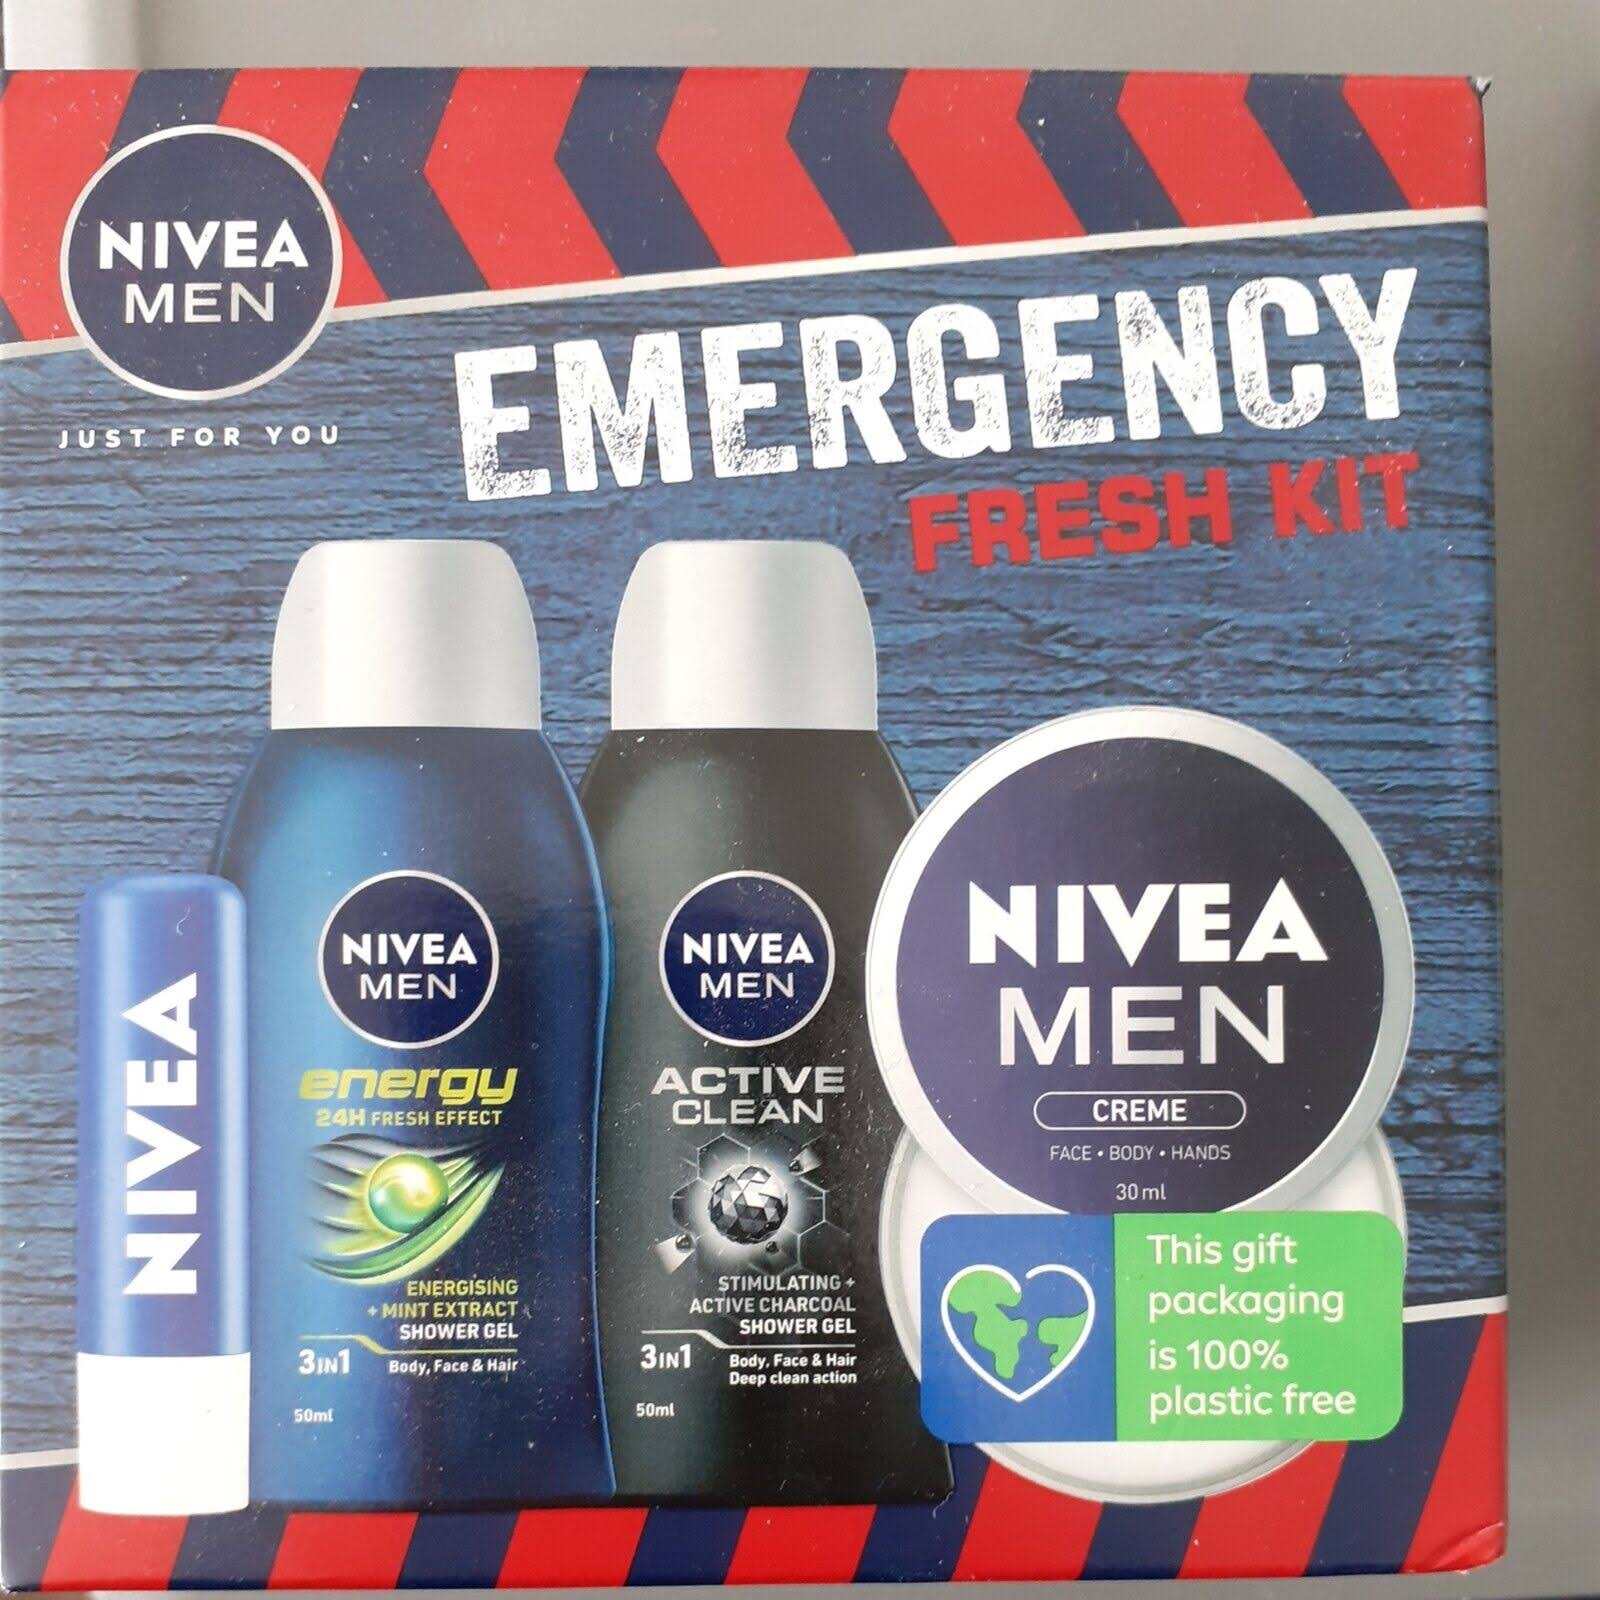 Nivea Men Emergency Fresh Kit Gift Set